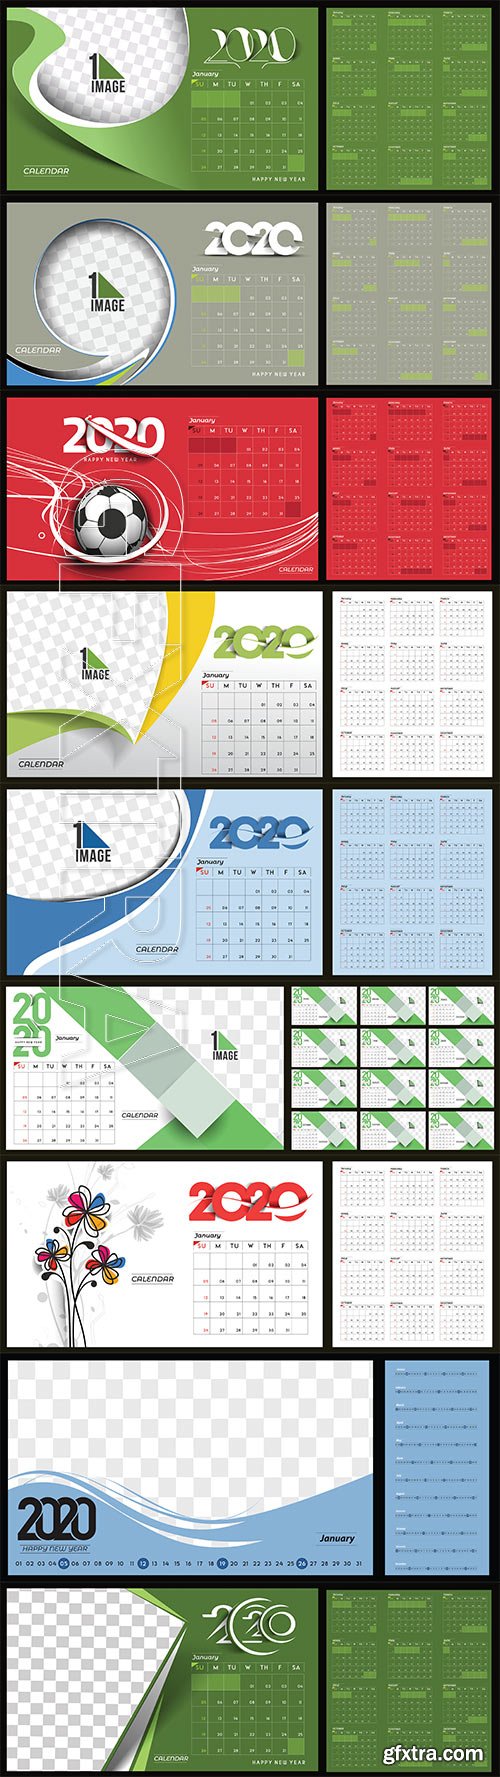 Happy new year 2020 Calendar vector illustration template